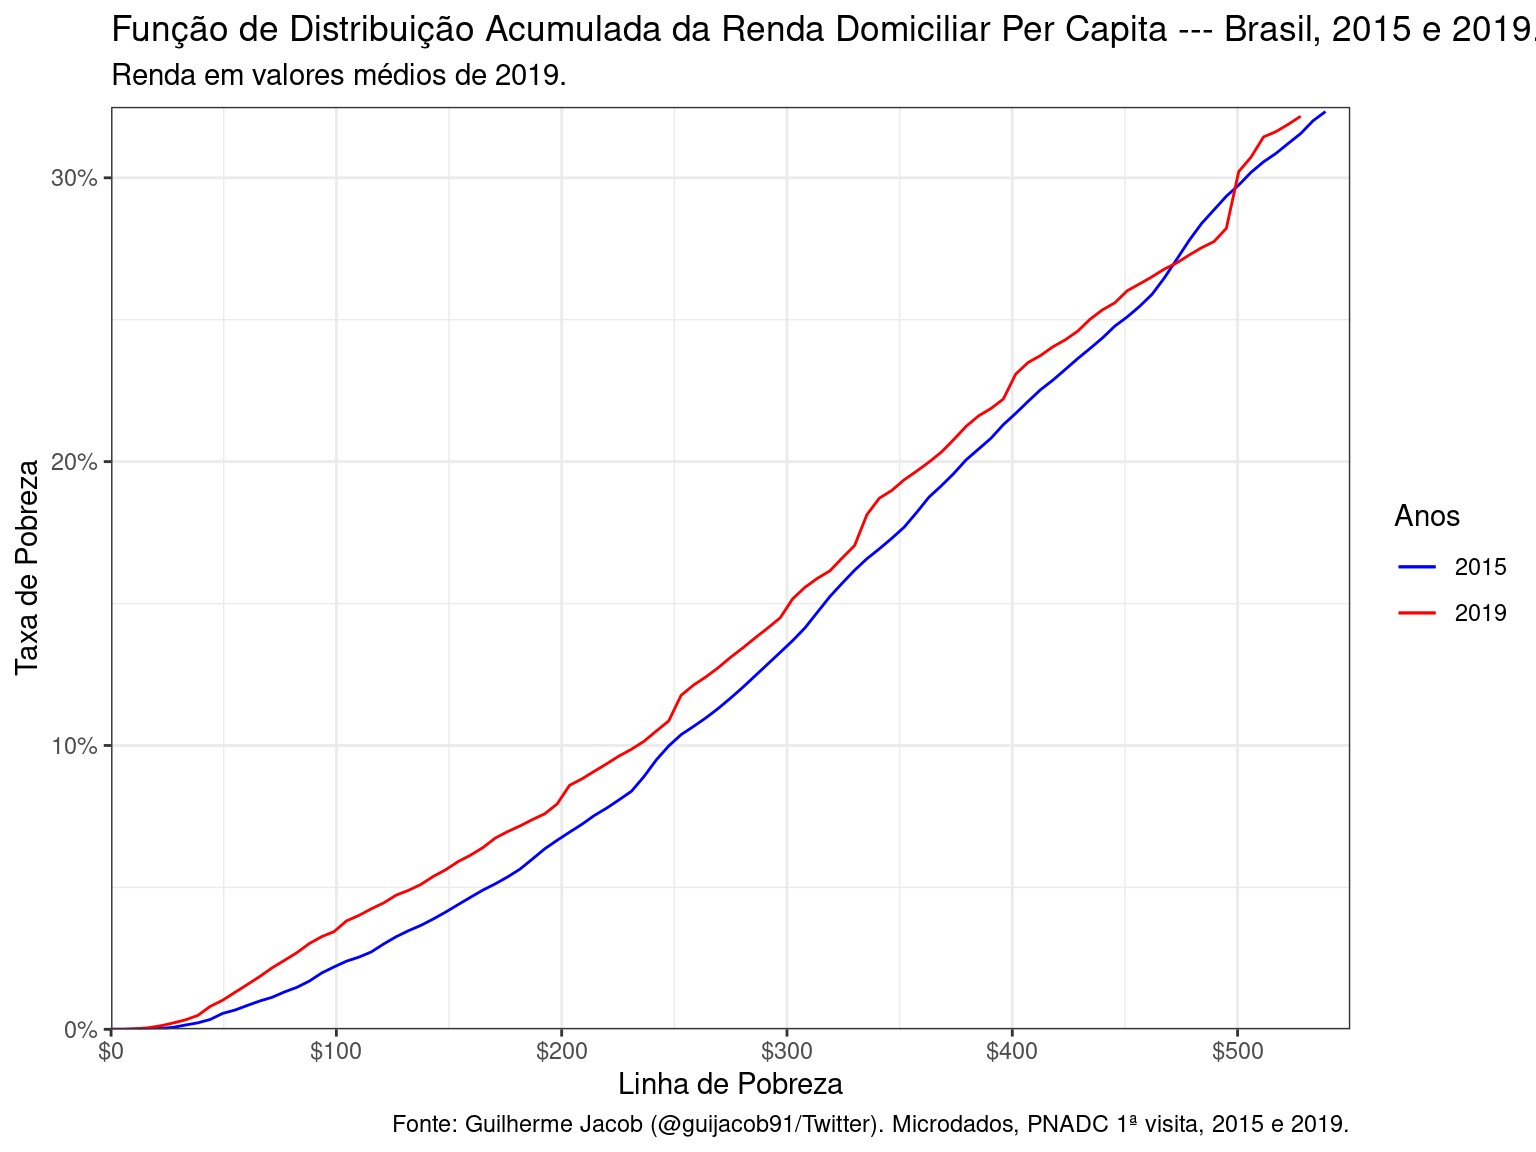 Funções de Distribuição Acumulada da renda domiciliar per capita - Brasil, 2014 e 2019.